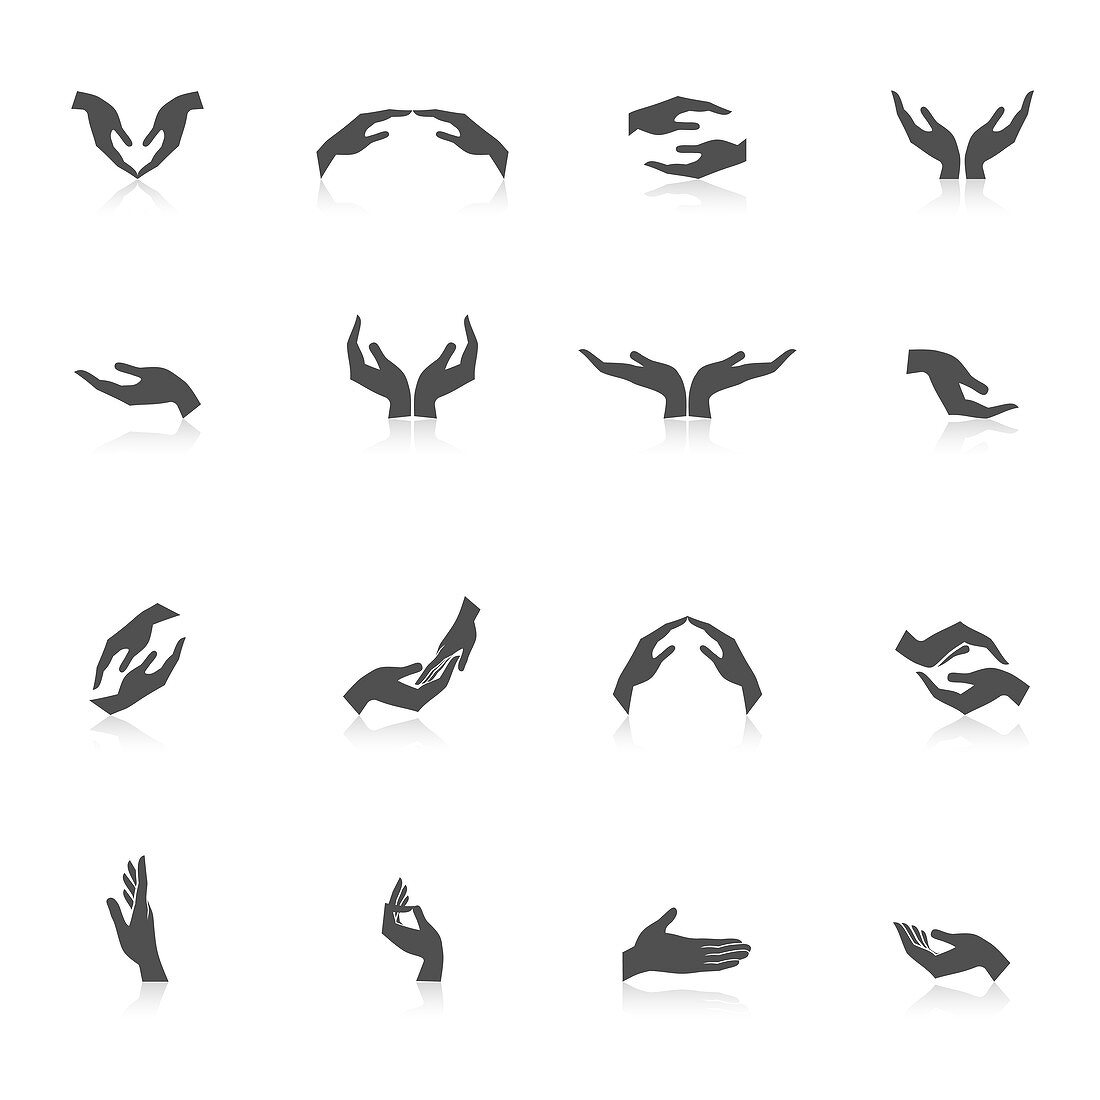 Hand gesture icons, illustration